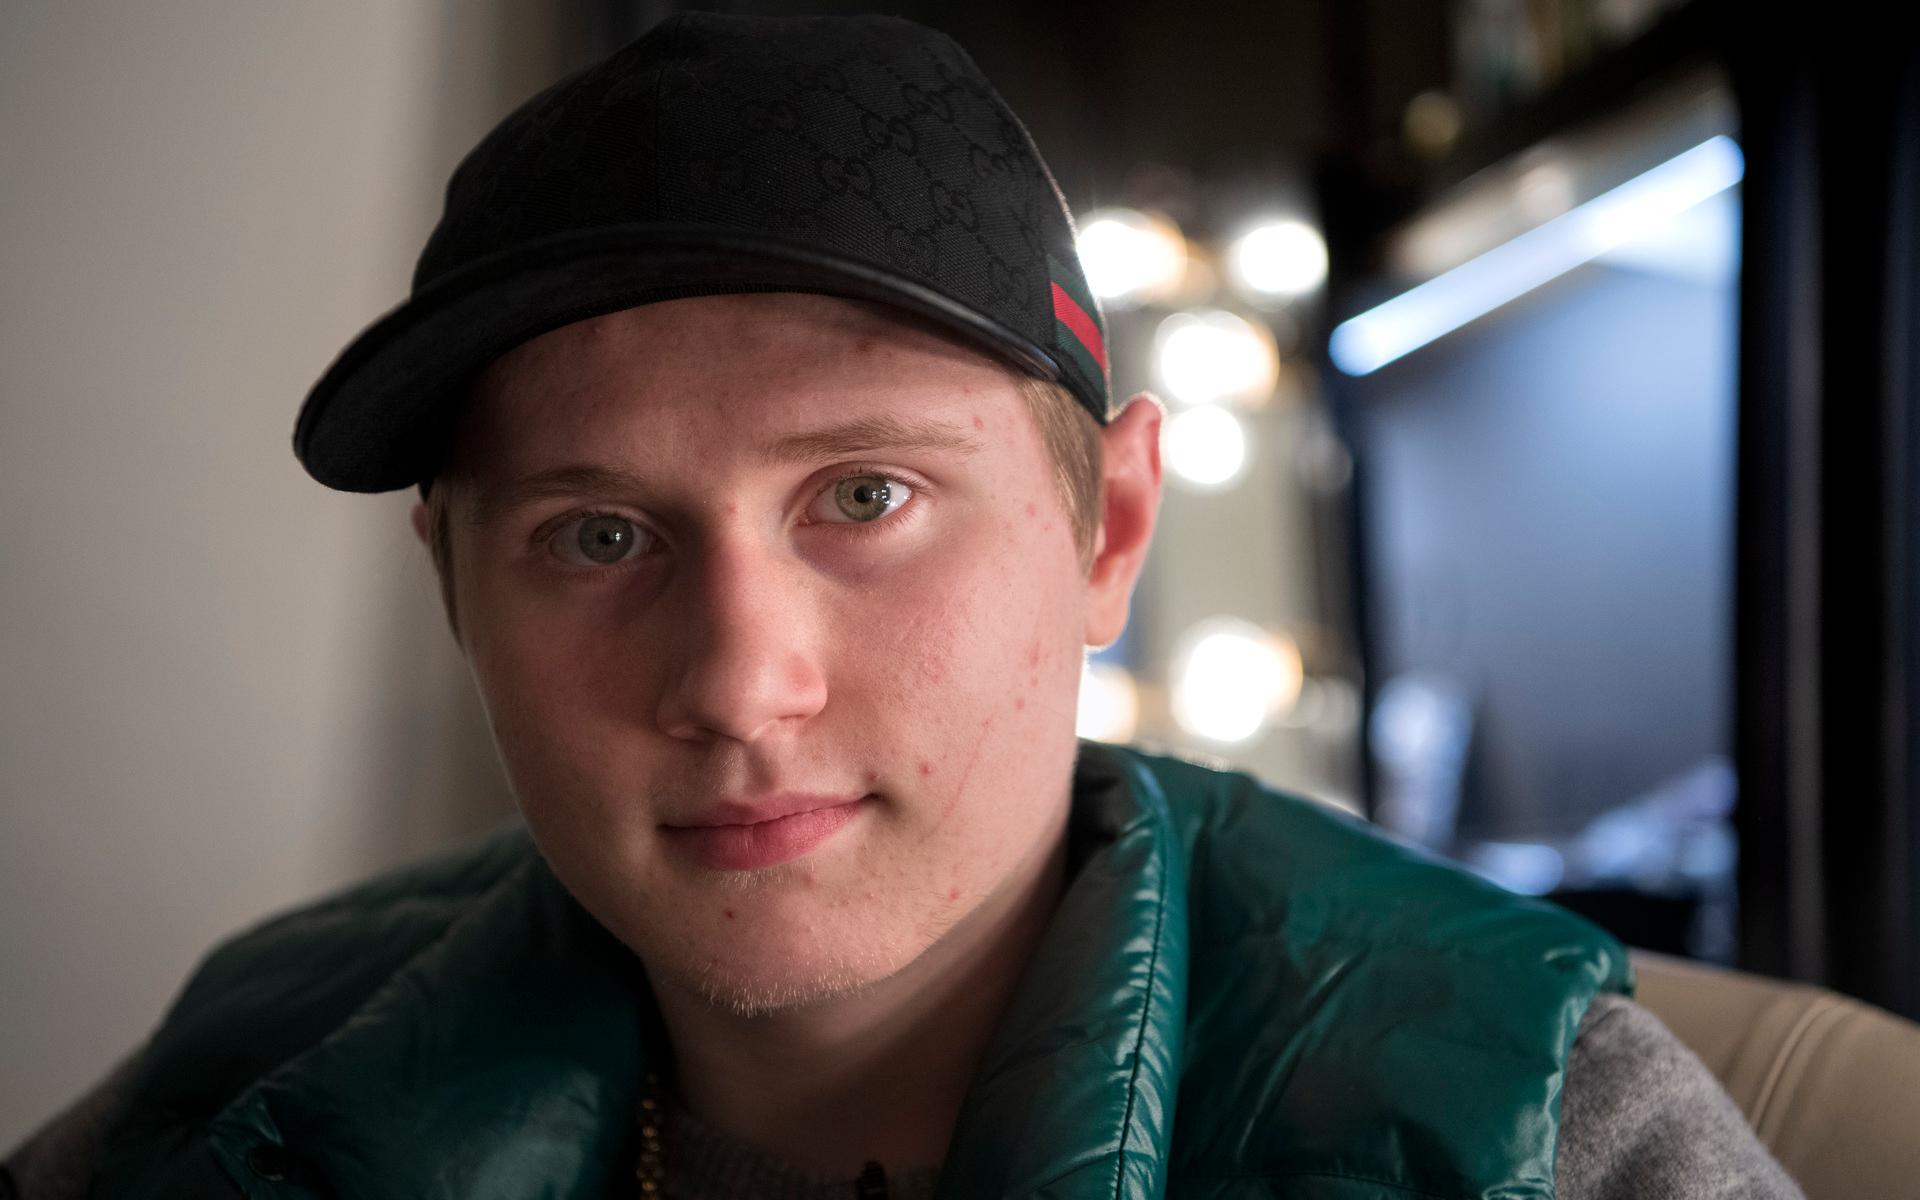 Rapparen Einár sköts till döds under torsdagskvällen. Han blev 19 år gammal. 